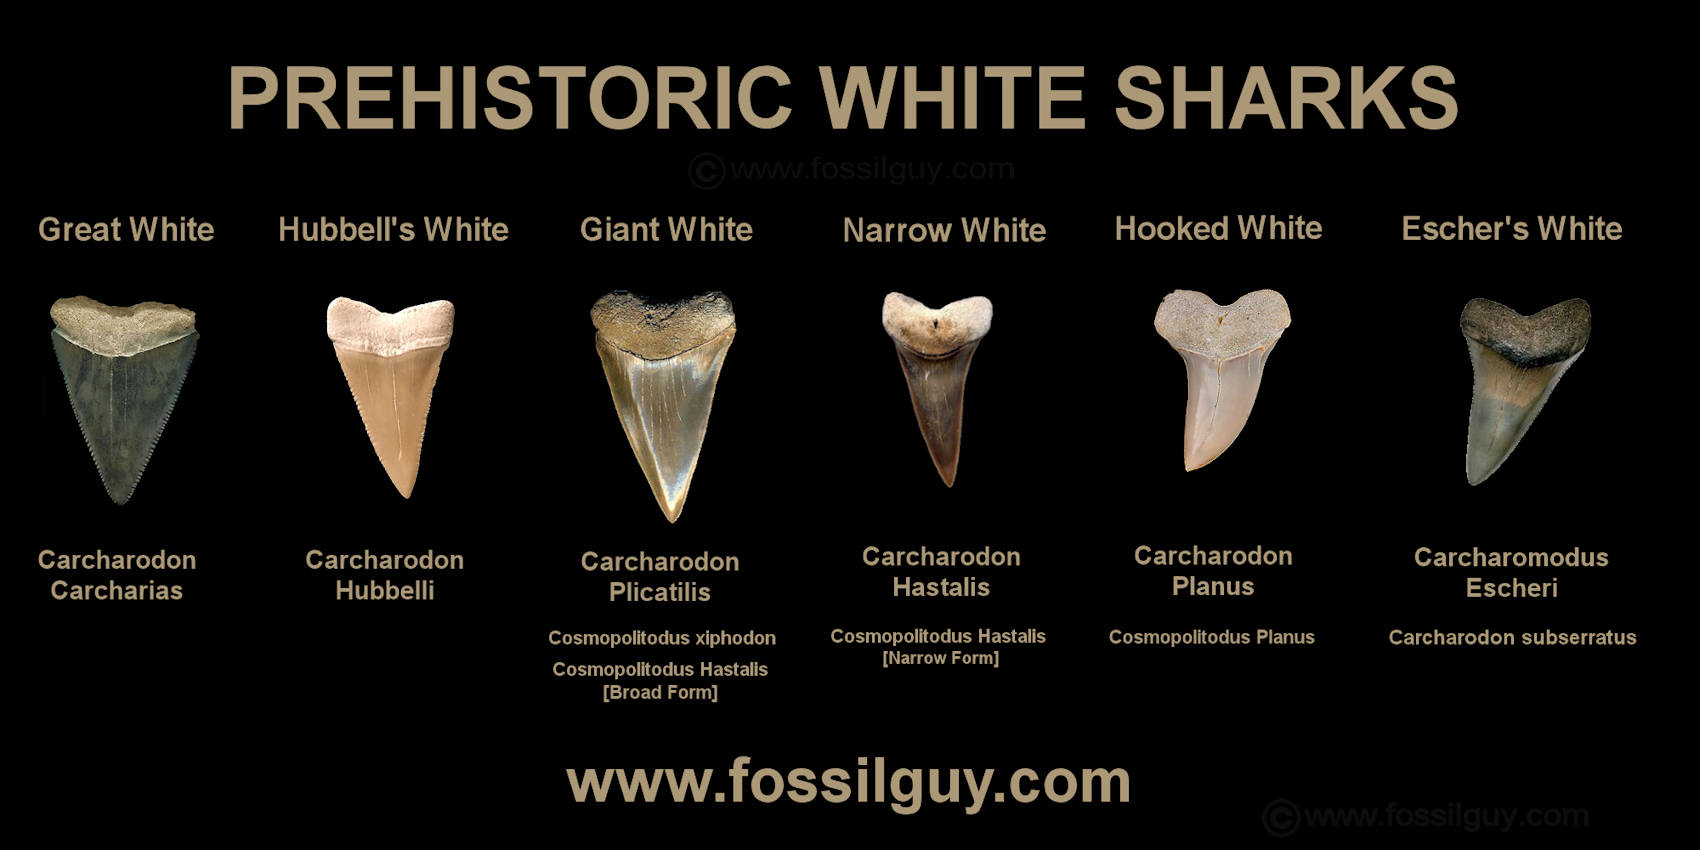 Image showing various White Shark Species - C. carcharias, C. escheri,  C. hastalis [broad form], C. hastalis  [narrow form], and C. planus.